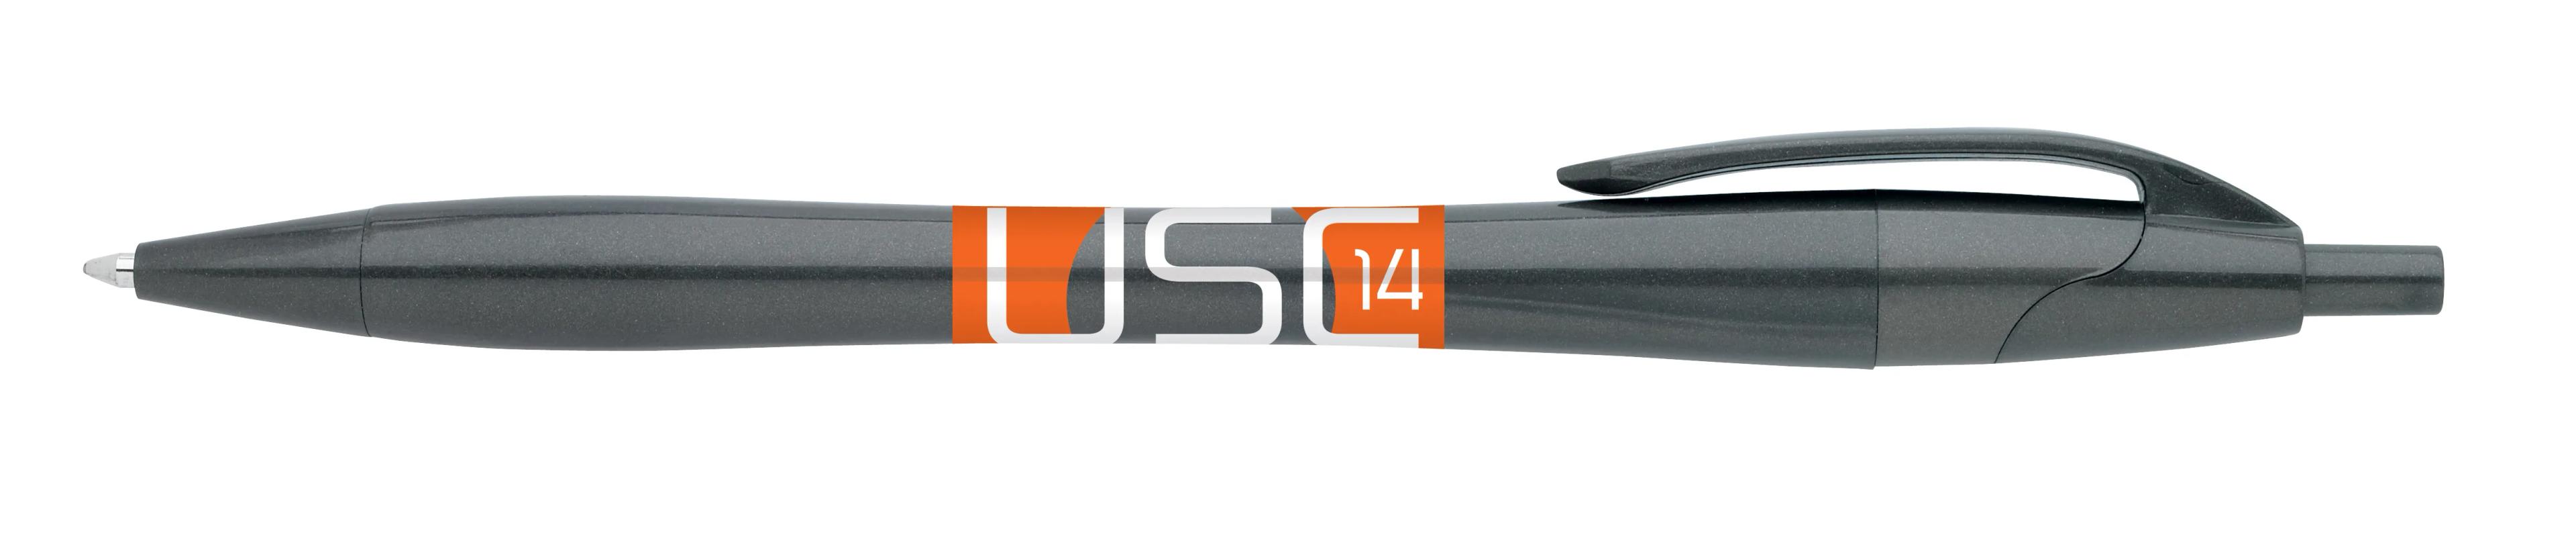 Style Dart Pen 19 of 29